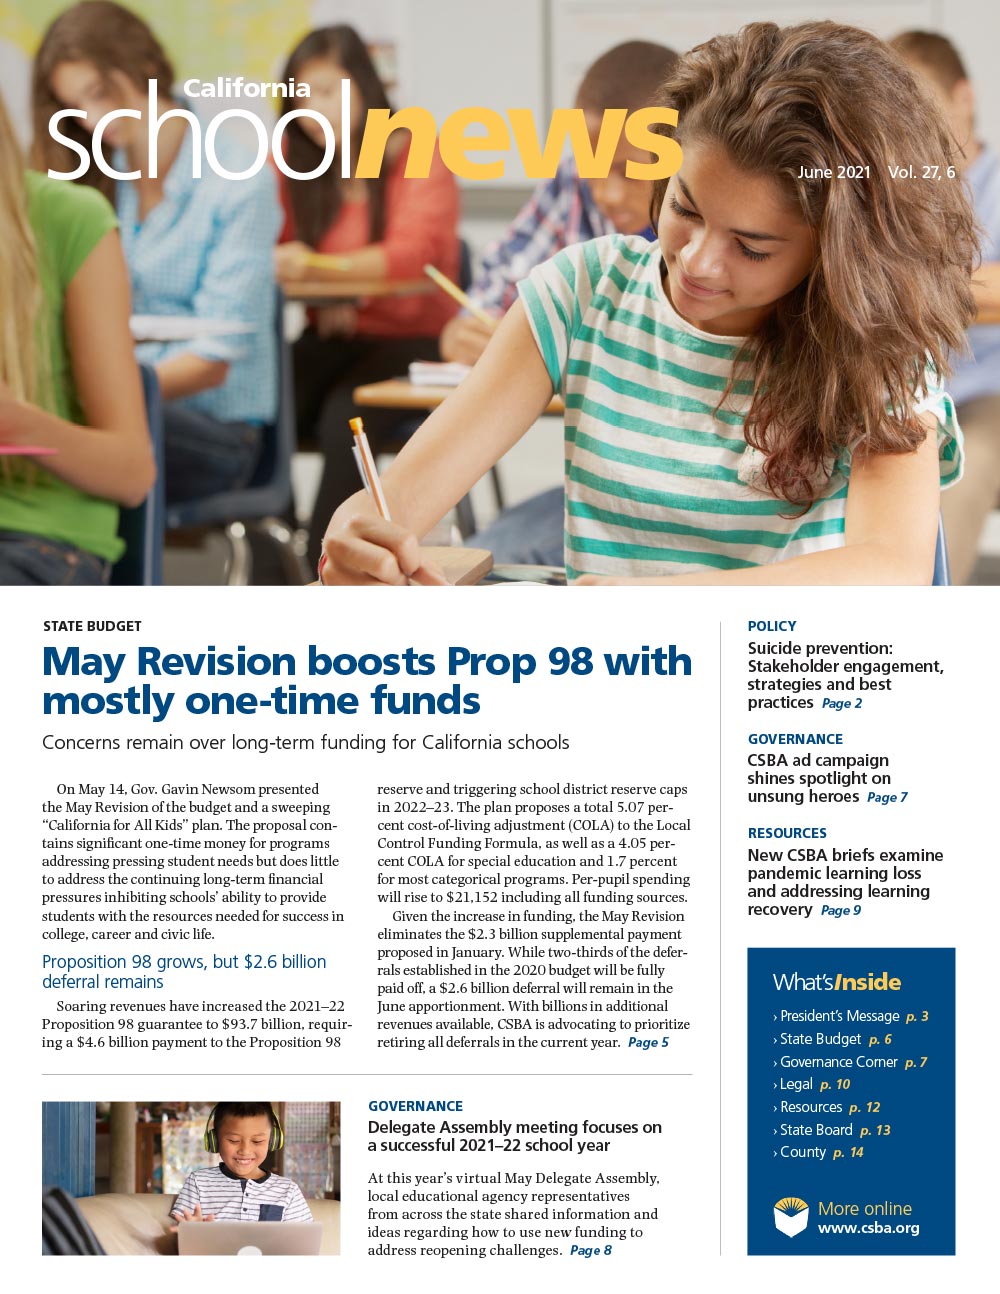 California School News June 2021 cover